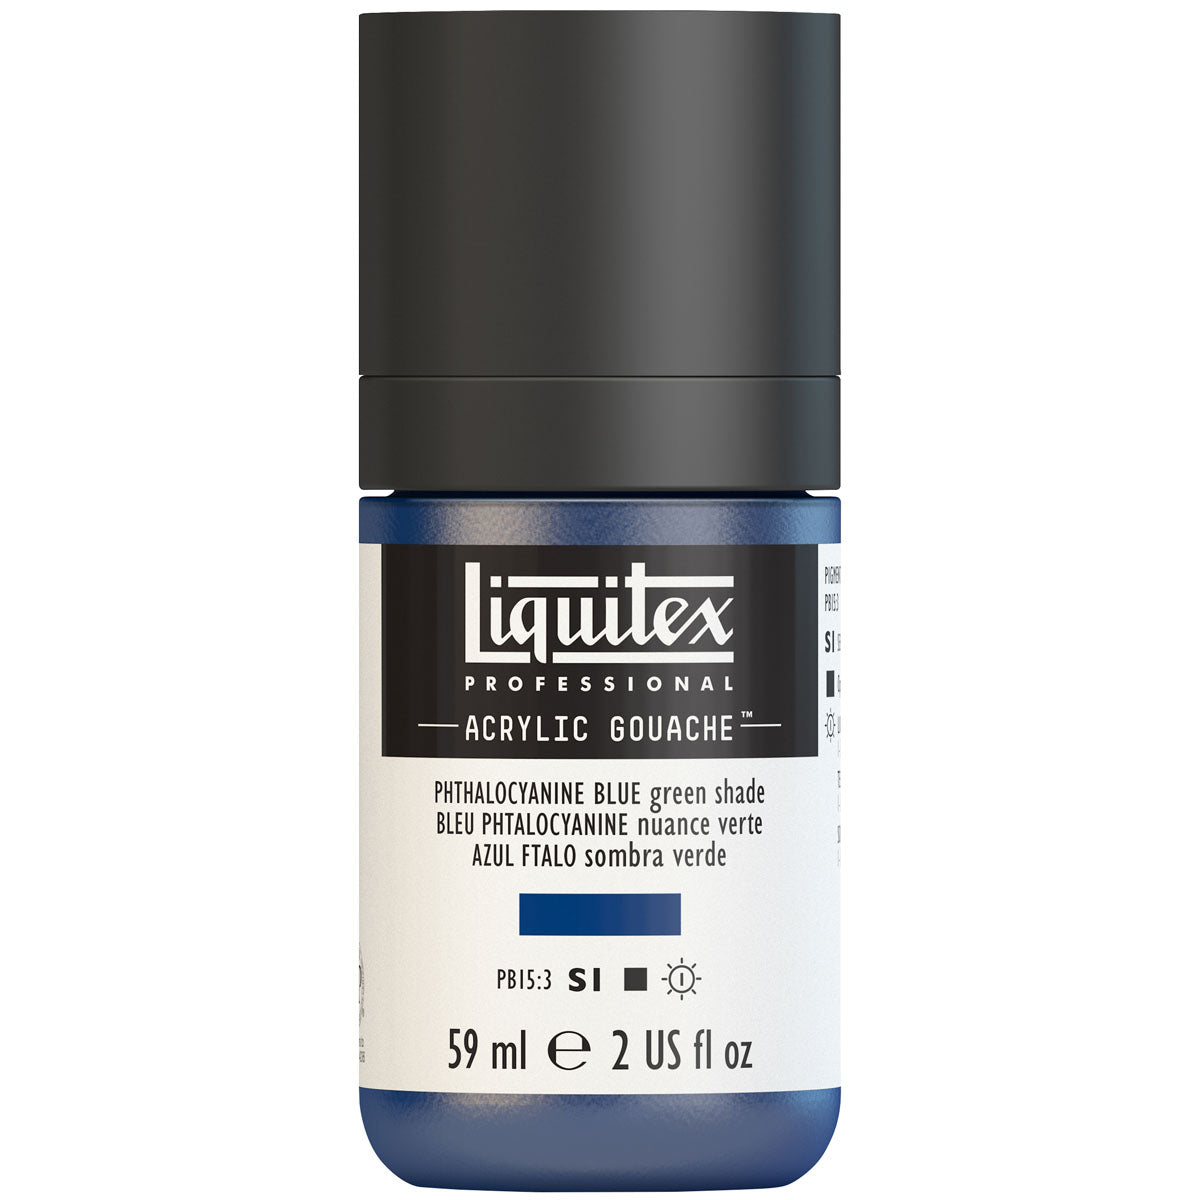 Liquitex - Acryl-Gouache 59ml S1 - Phthalocyanin Blau Grün Farbton